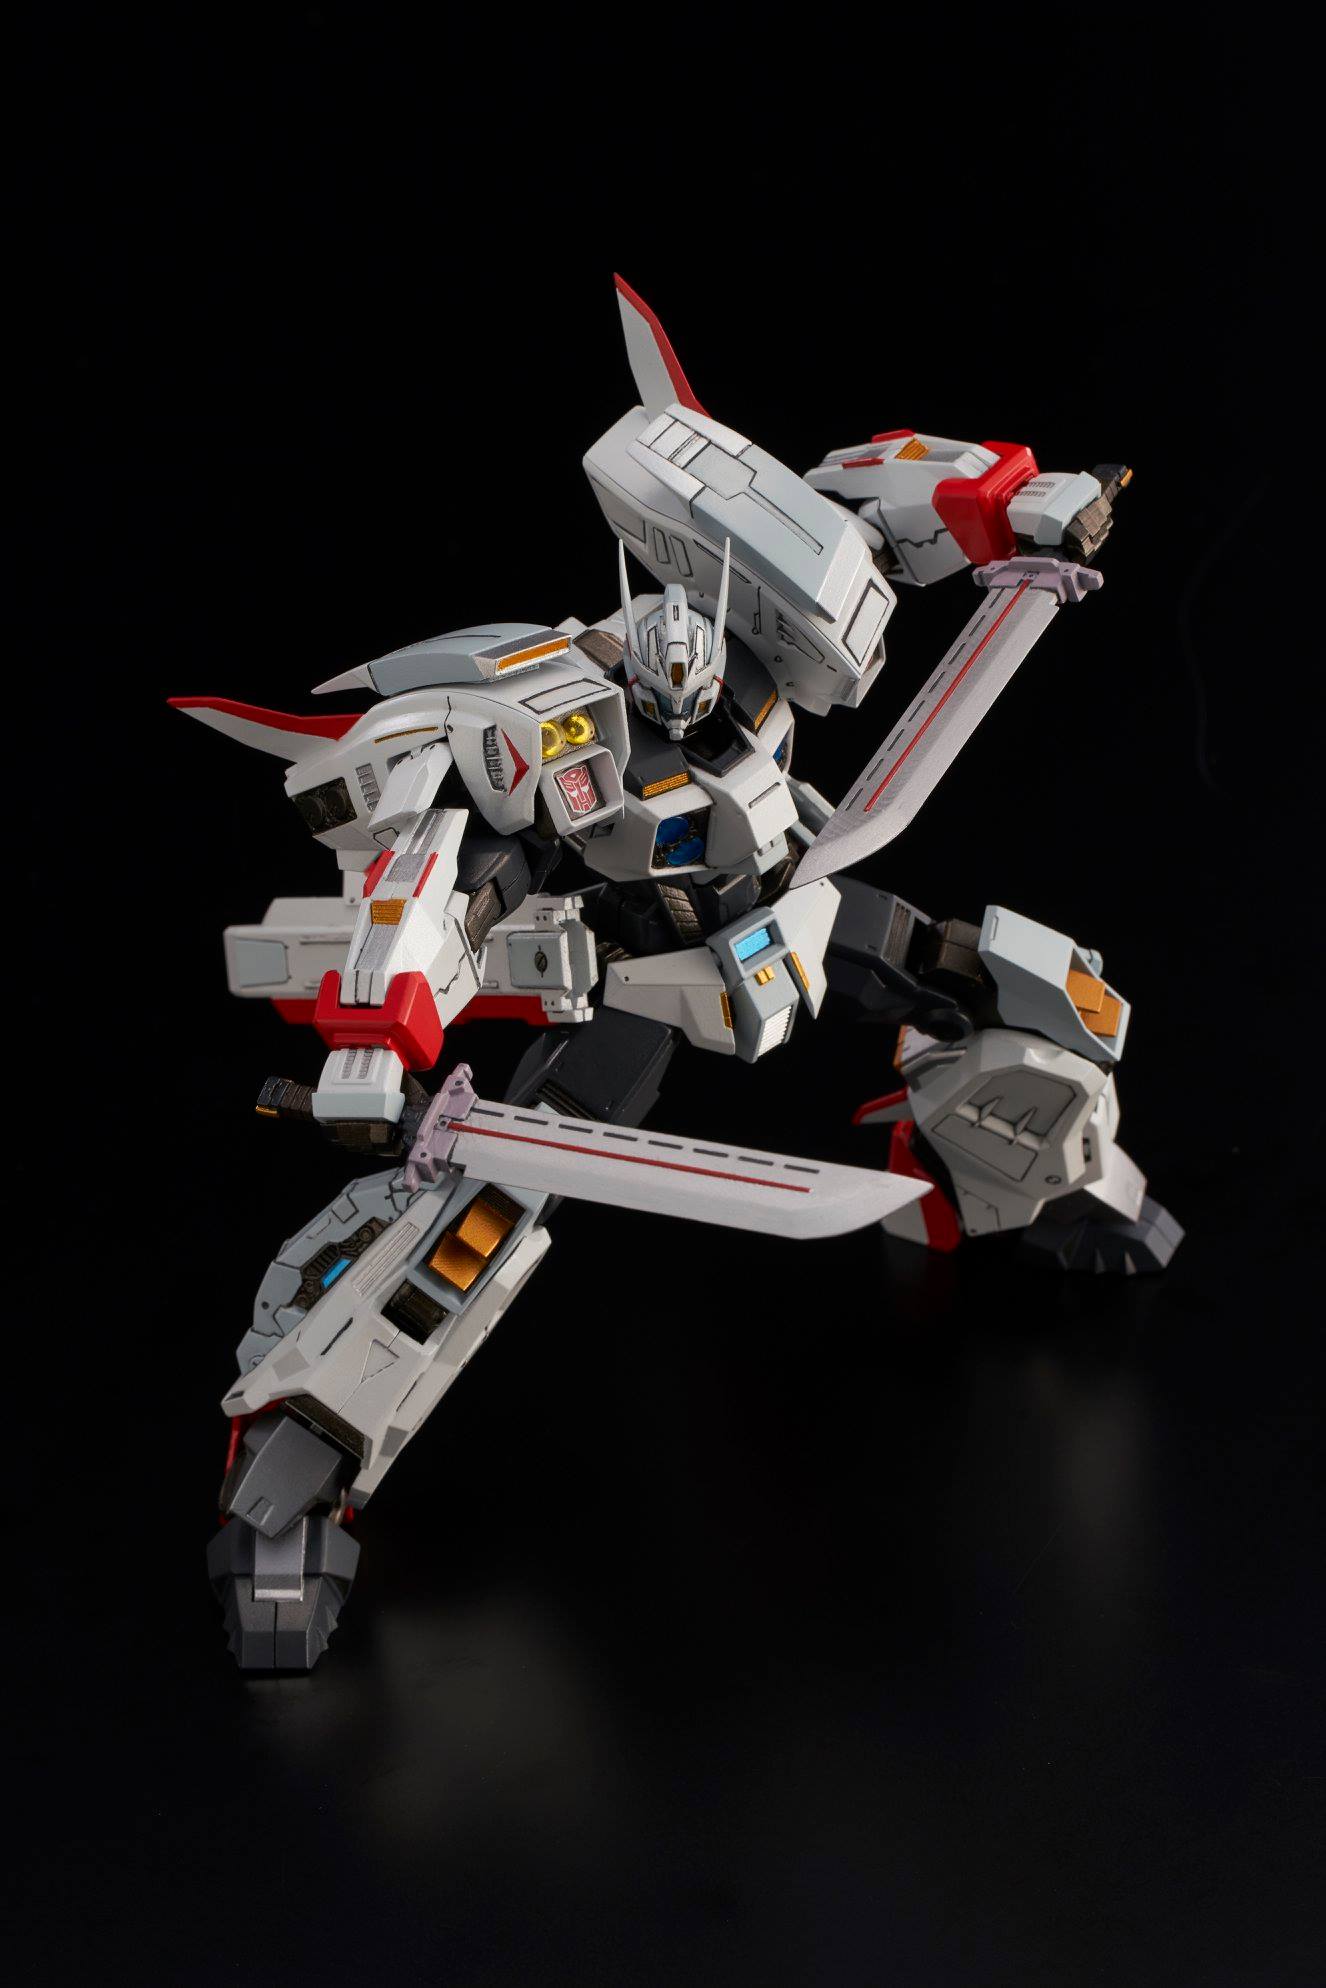 Furai Model Transformers Drift